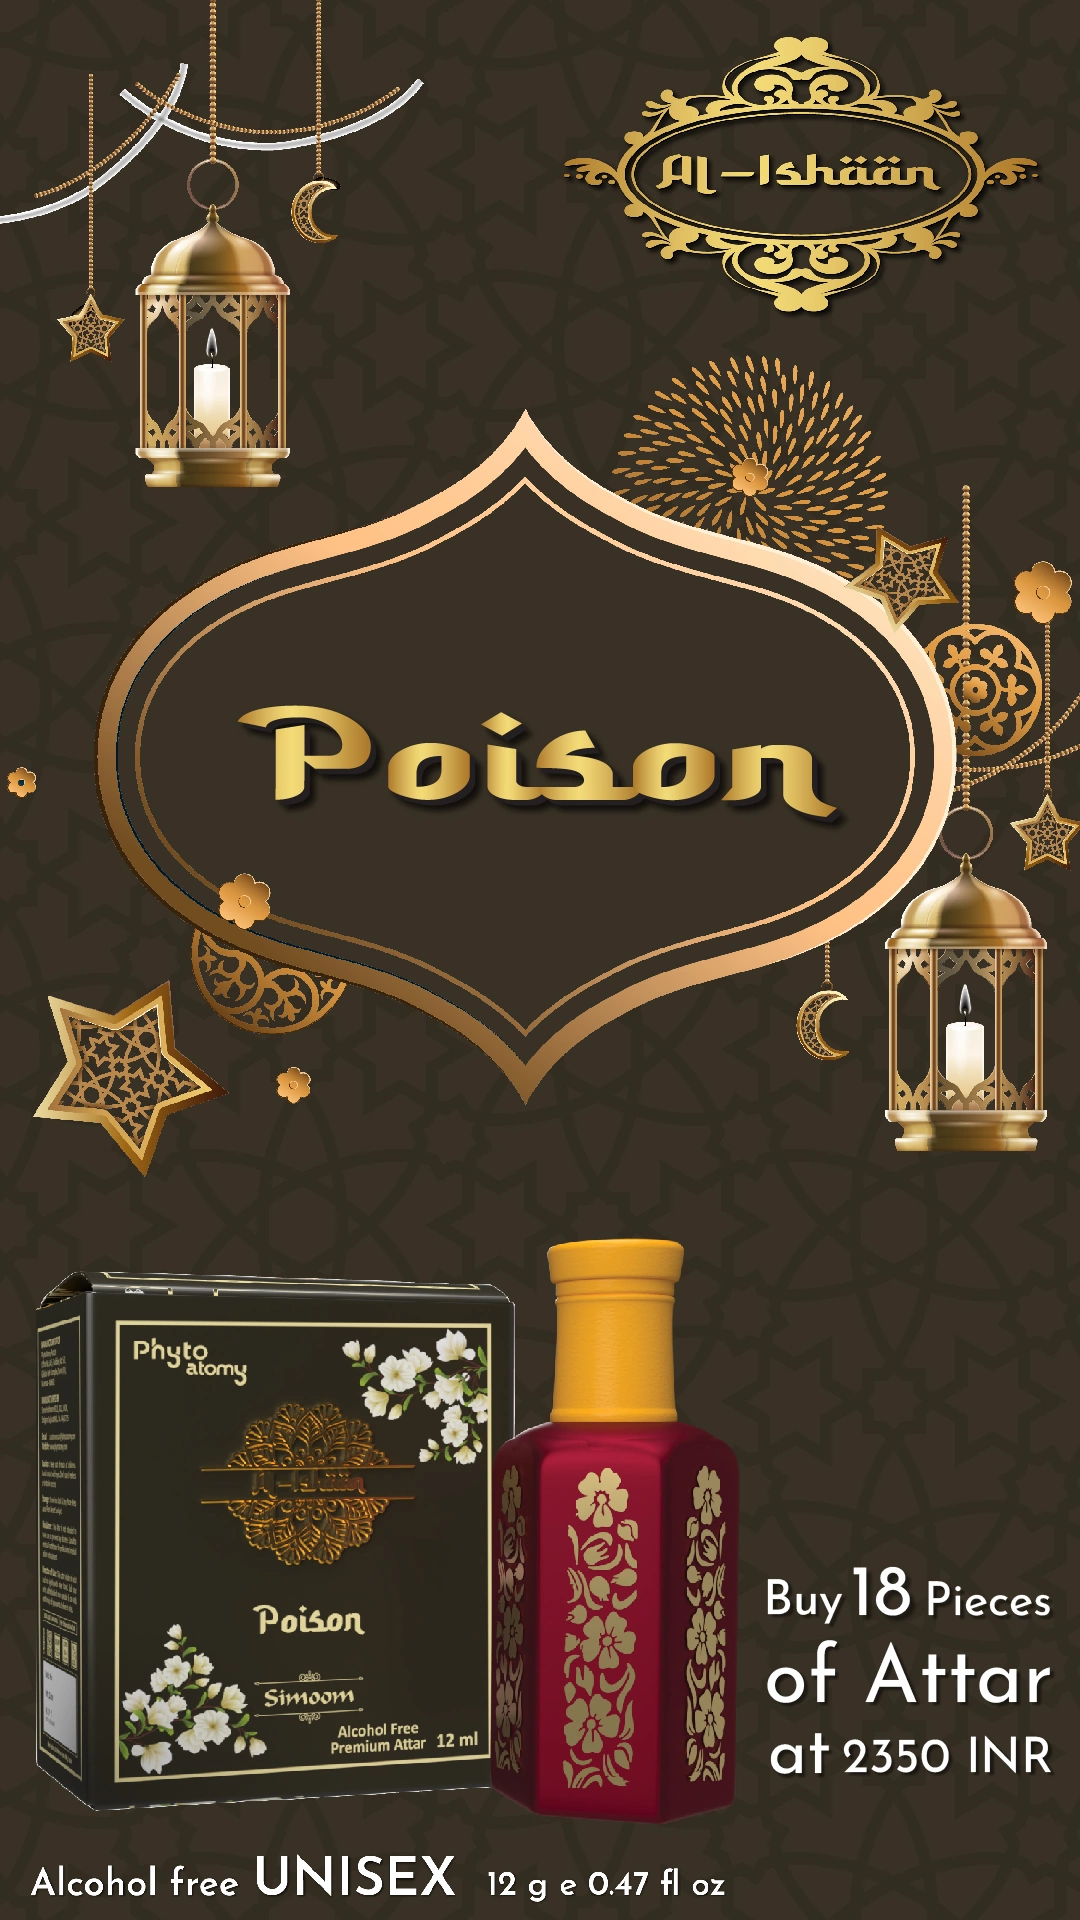 SCBV B2B Al Ishan Poison Attar (12ml)-18 Pcs.